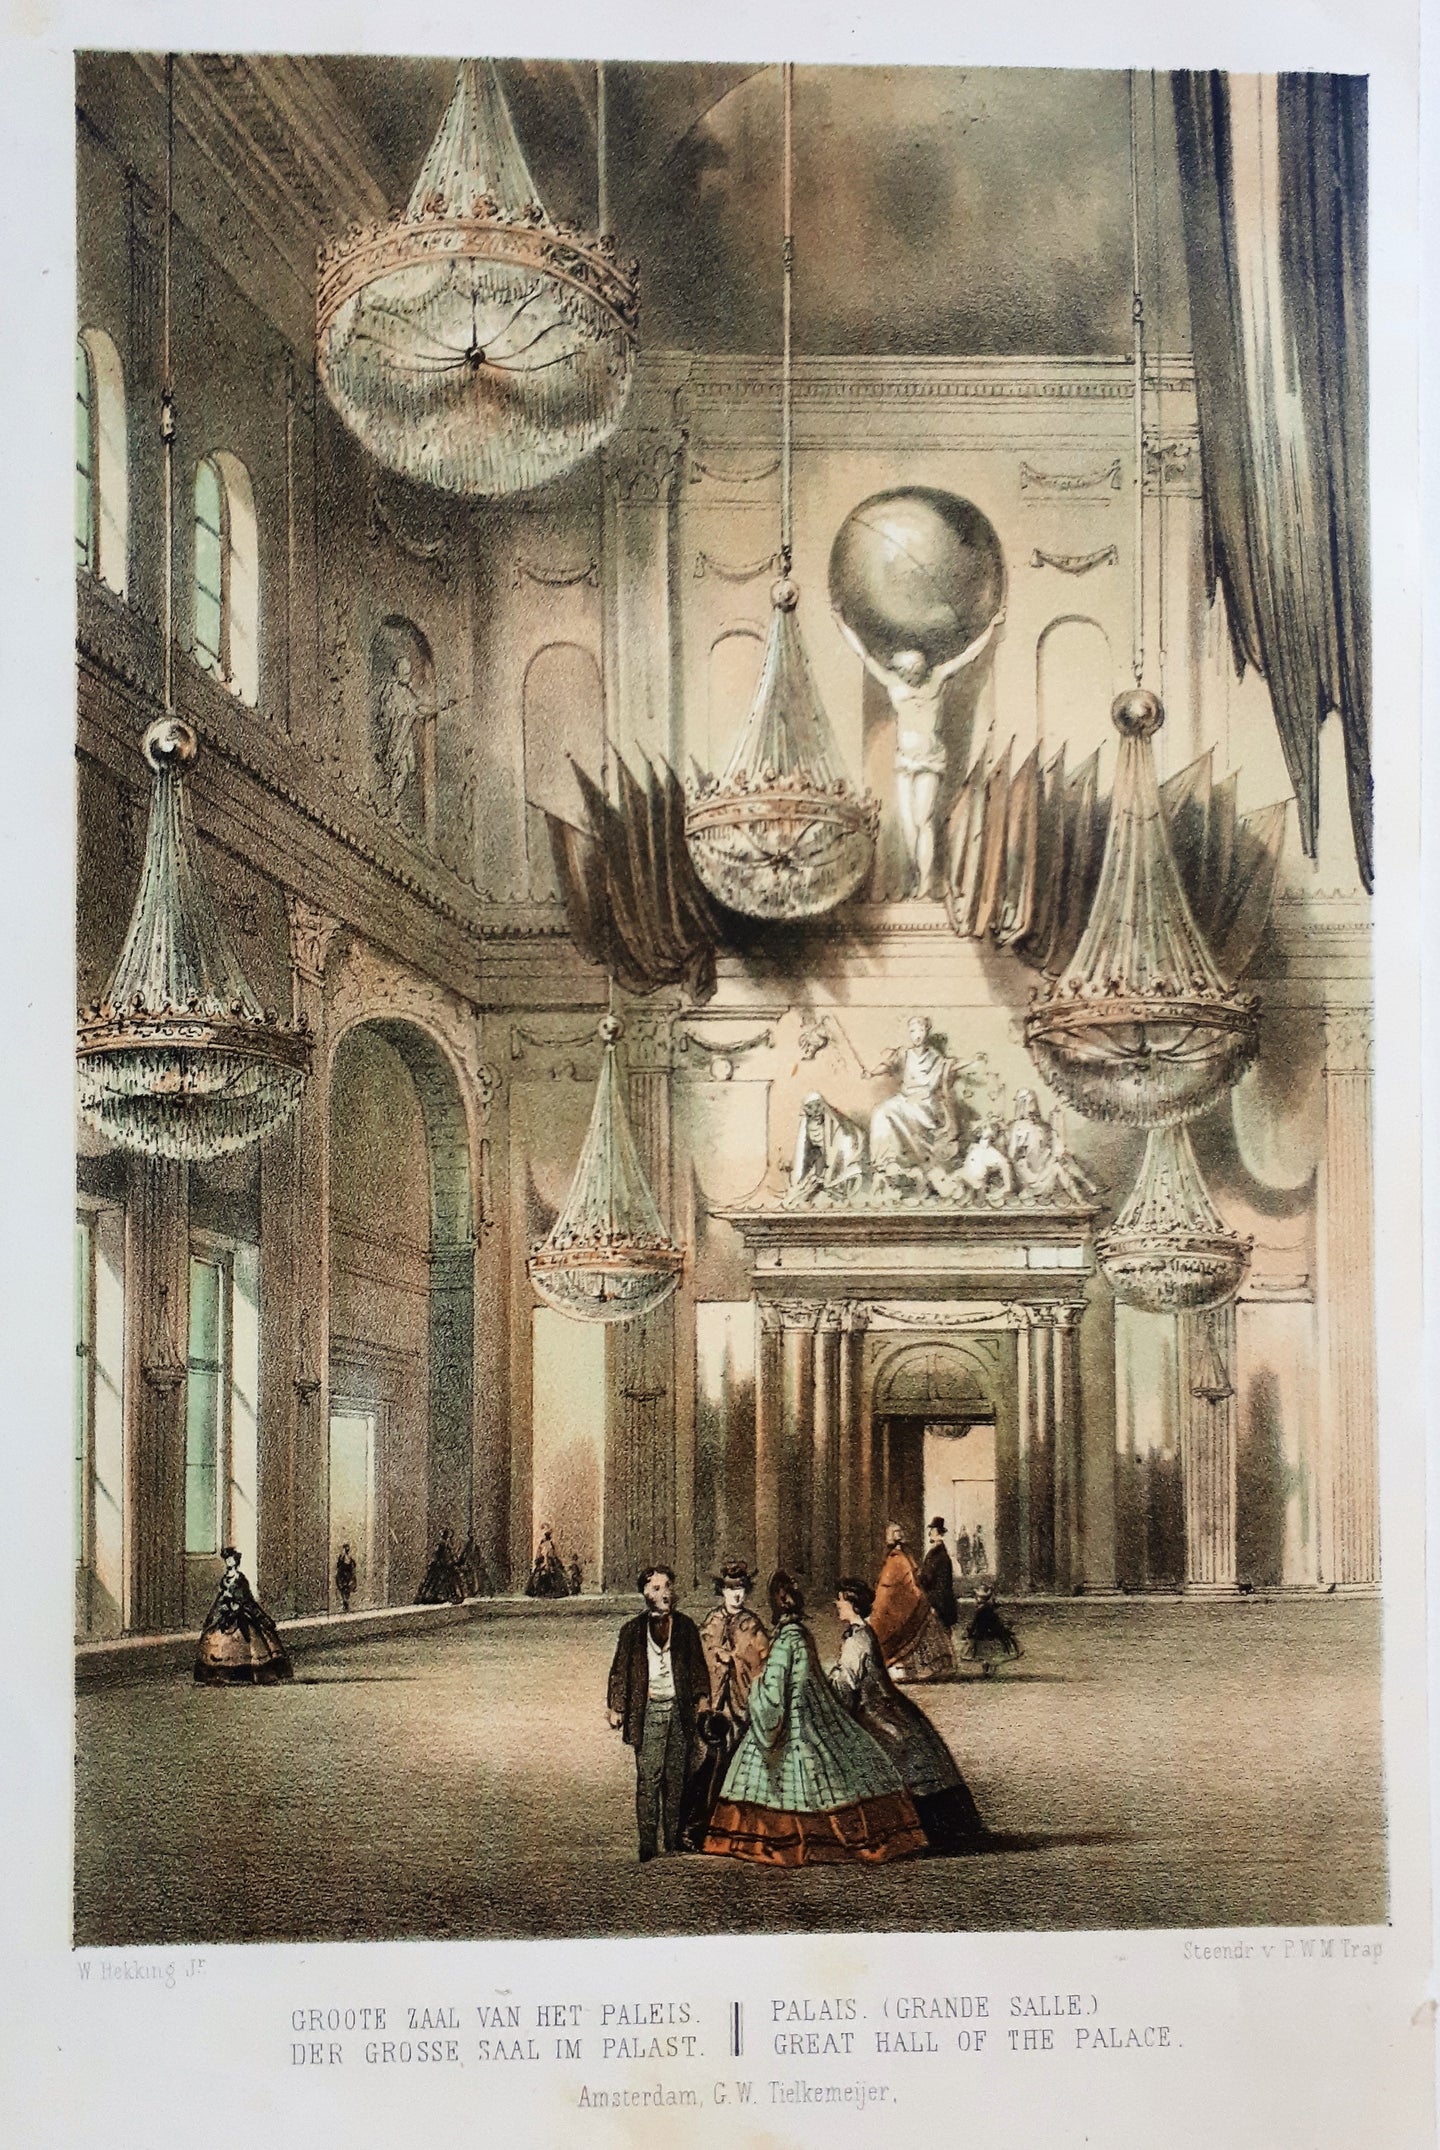 Amsterdam Grote zaal van het paleis - W Hekking jr/ GW Tielkemeijer, - 1869